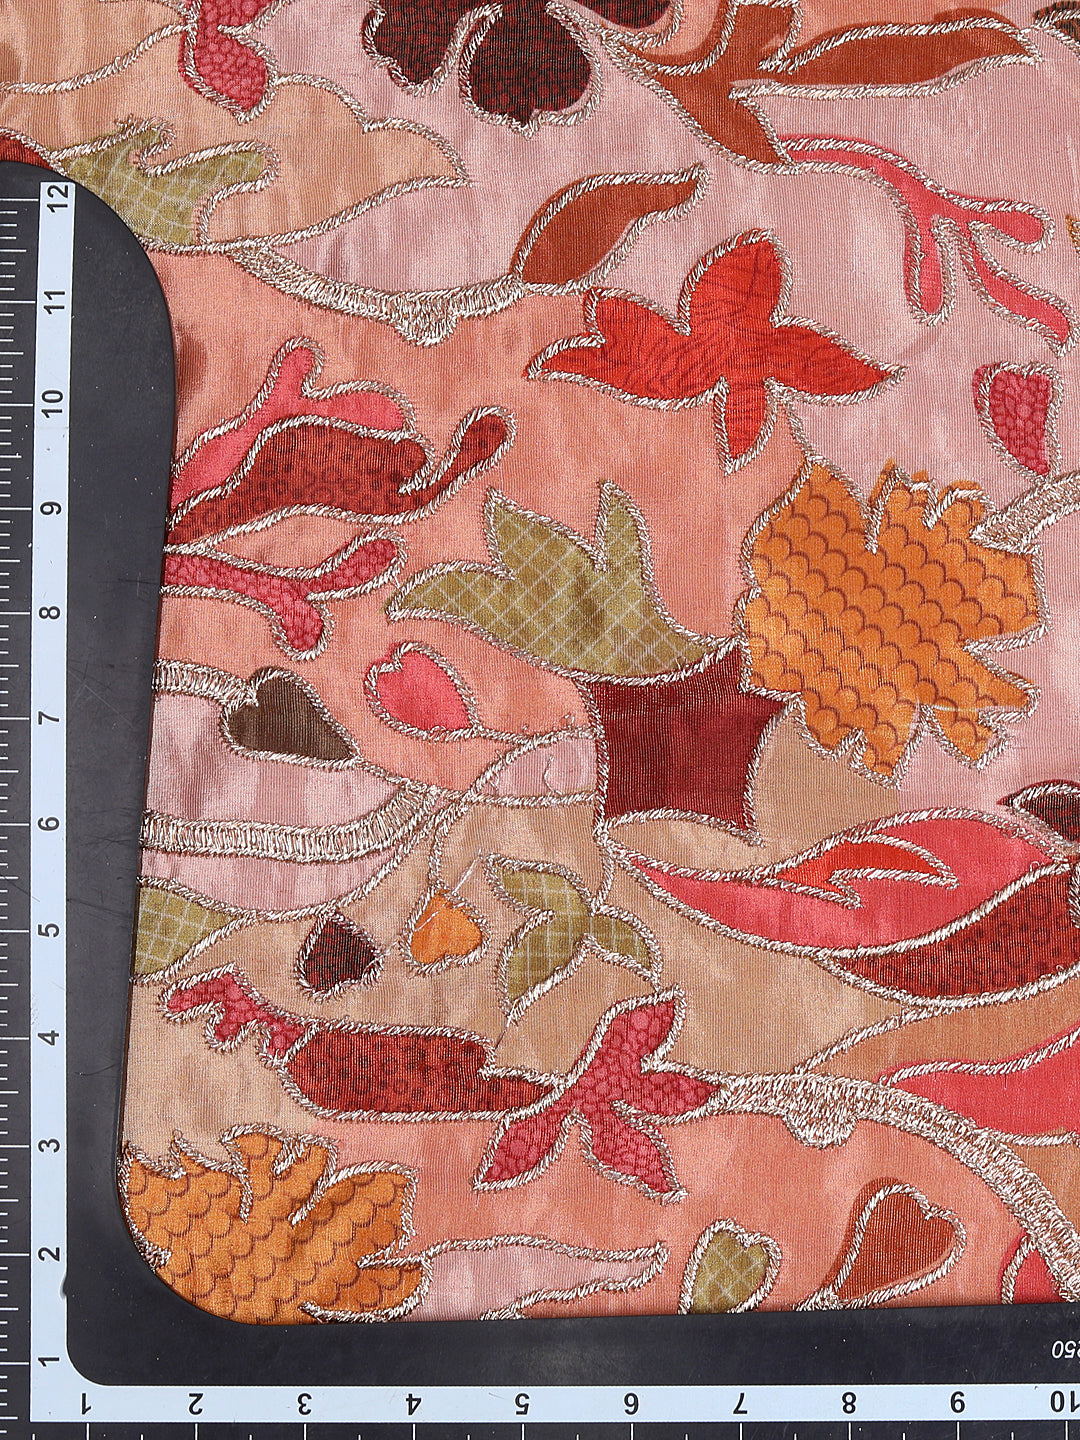 Monochrome Peach Floral Fabric